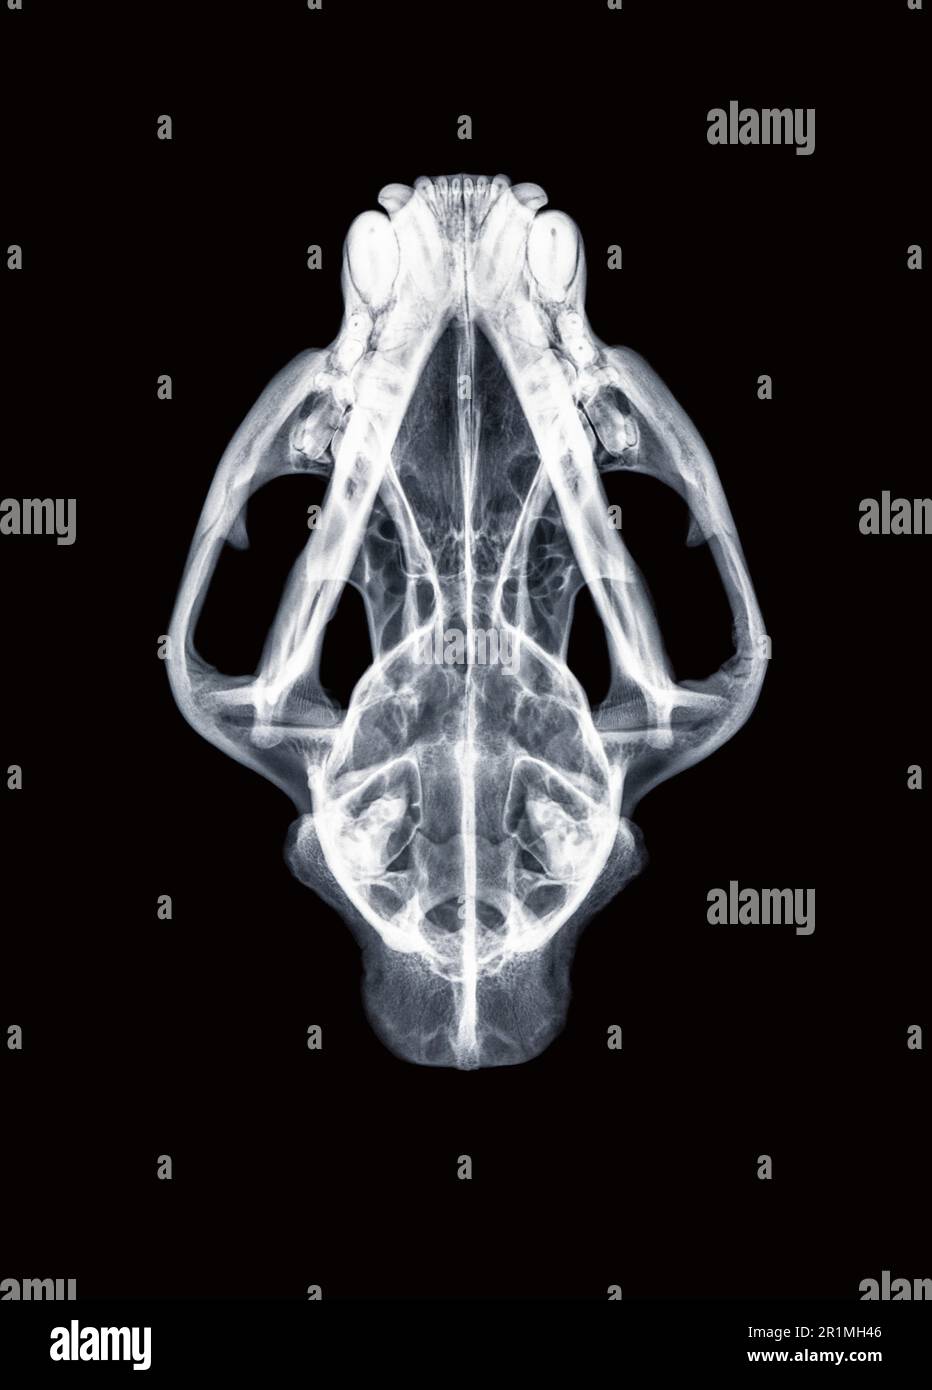 Mountain lion (Felis concolor) skull x-ray, superoinferior view Stock Photo